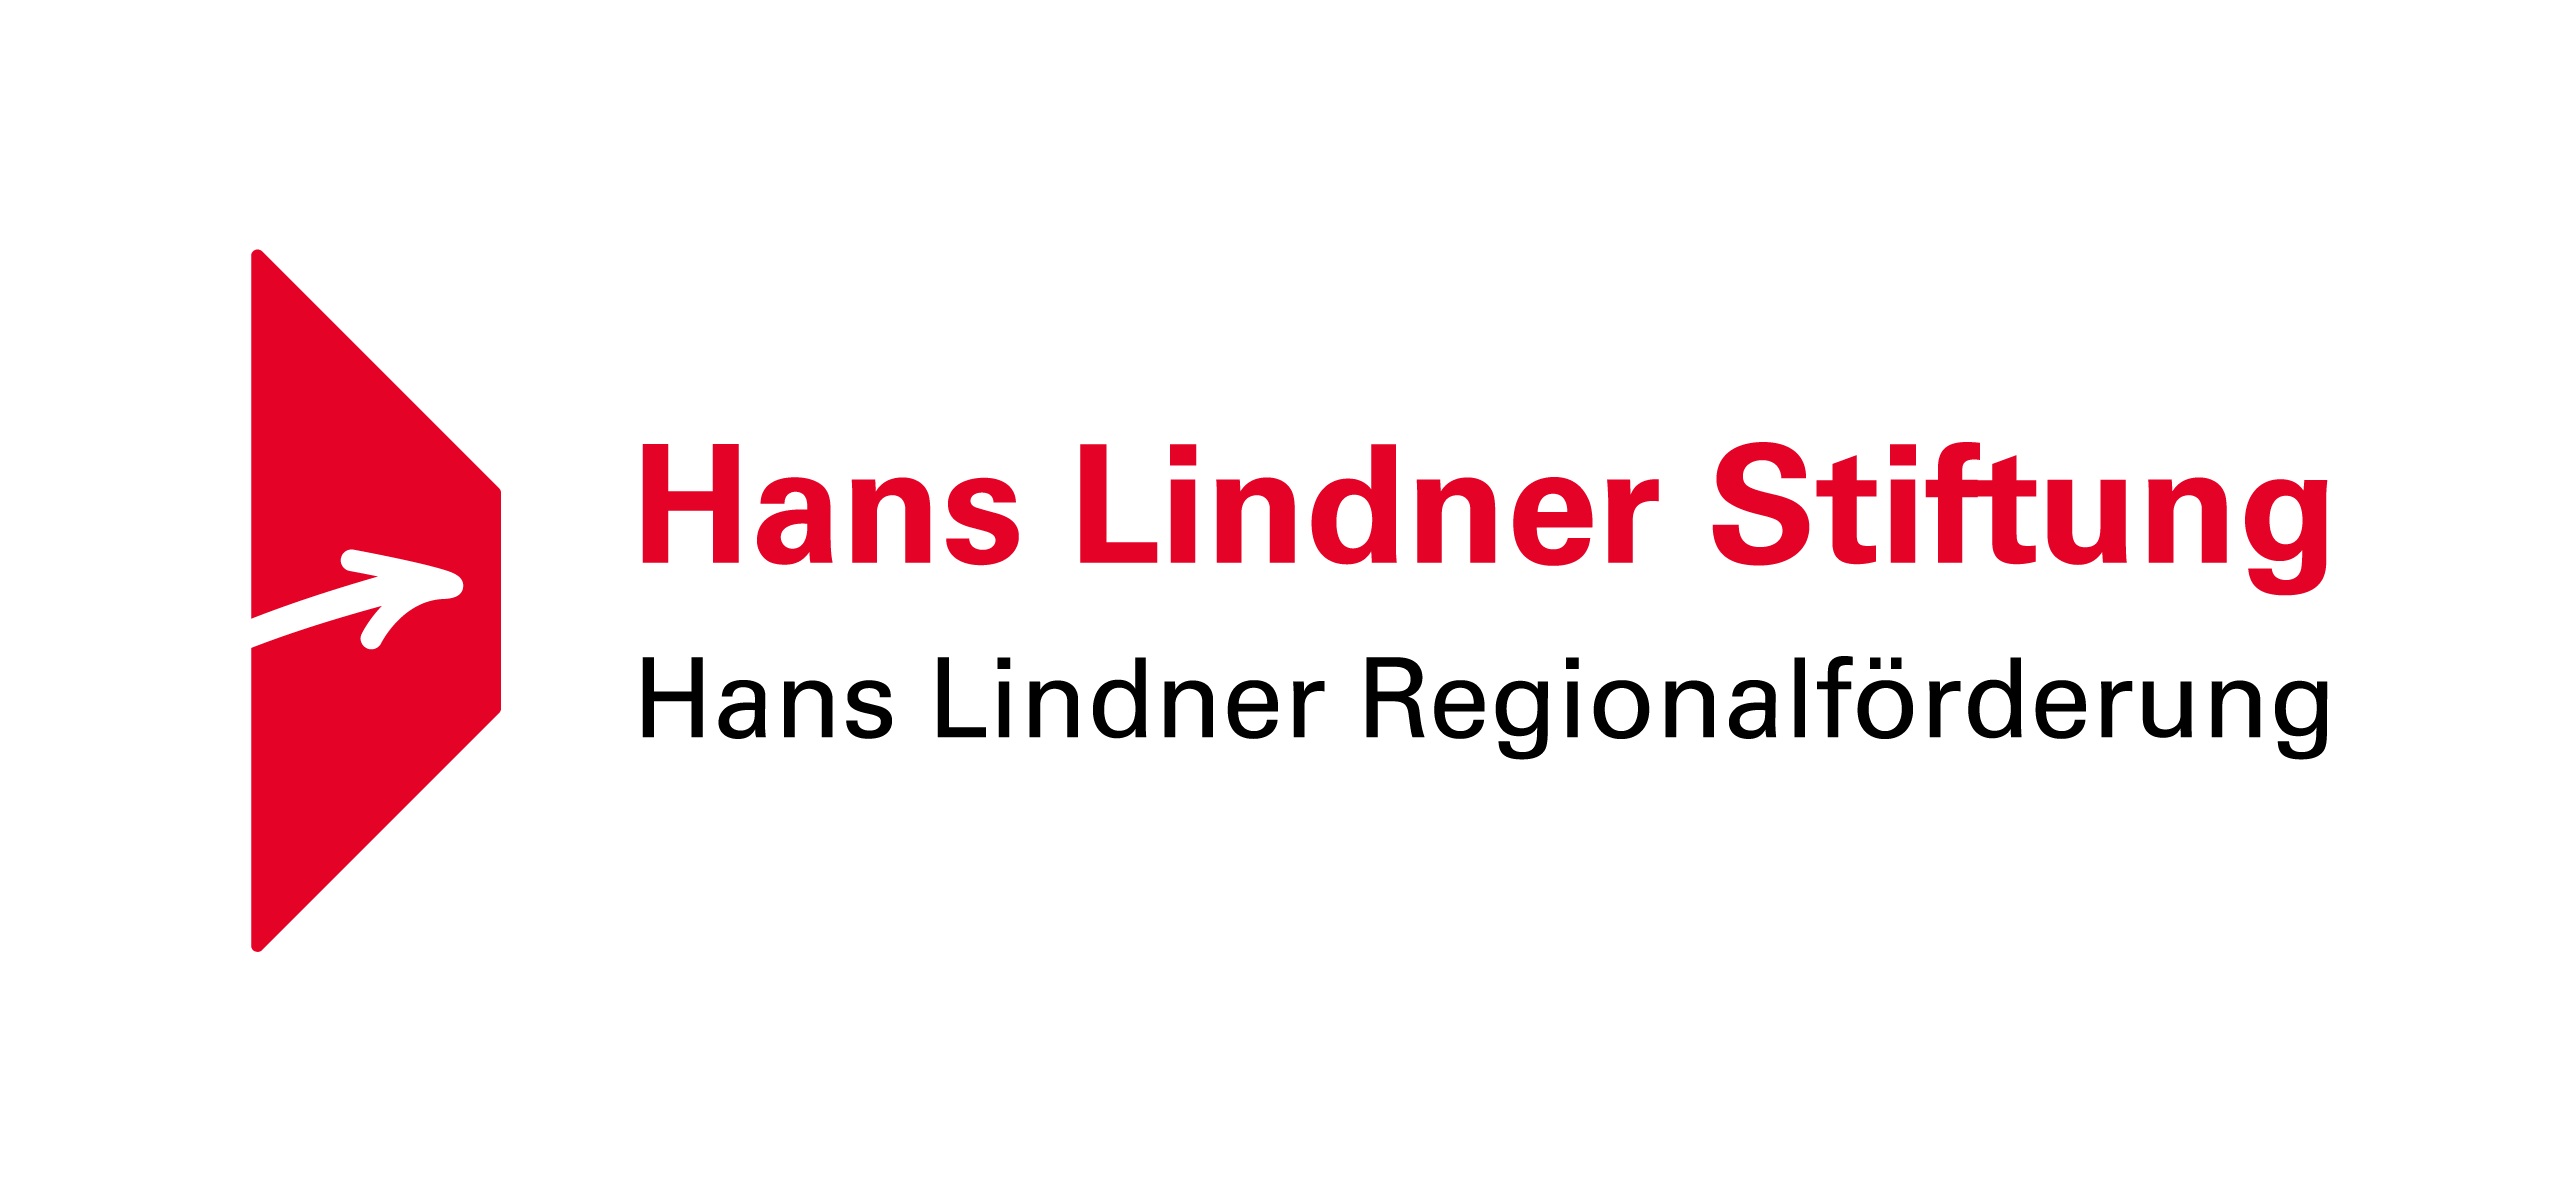 Hans Lindner Stiftung